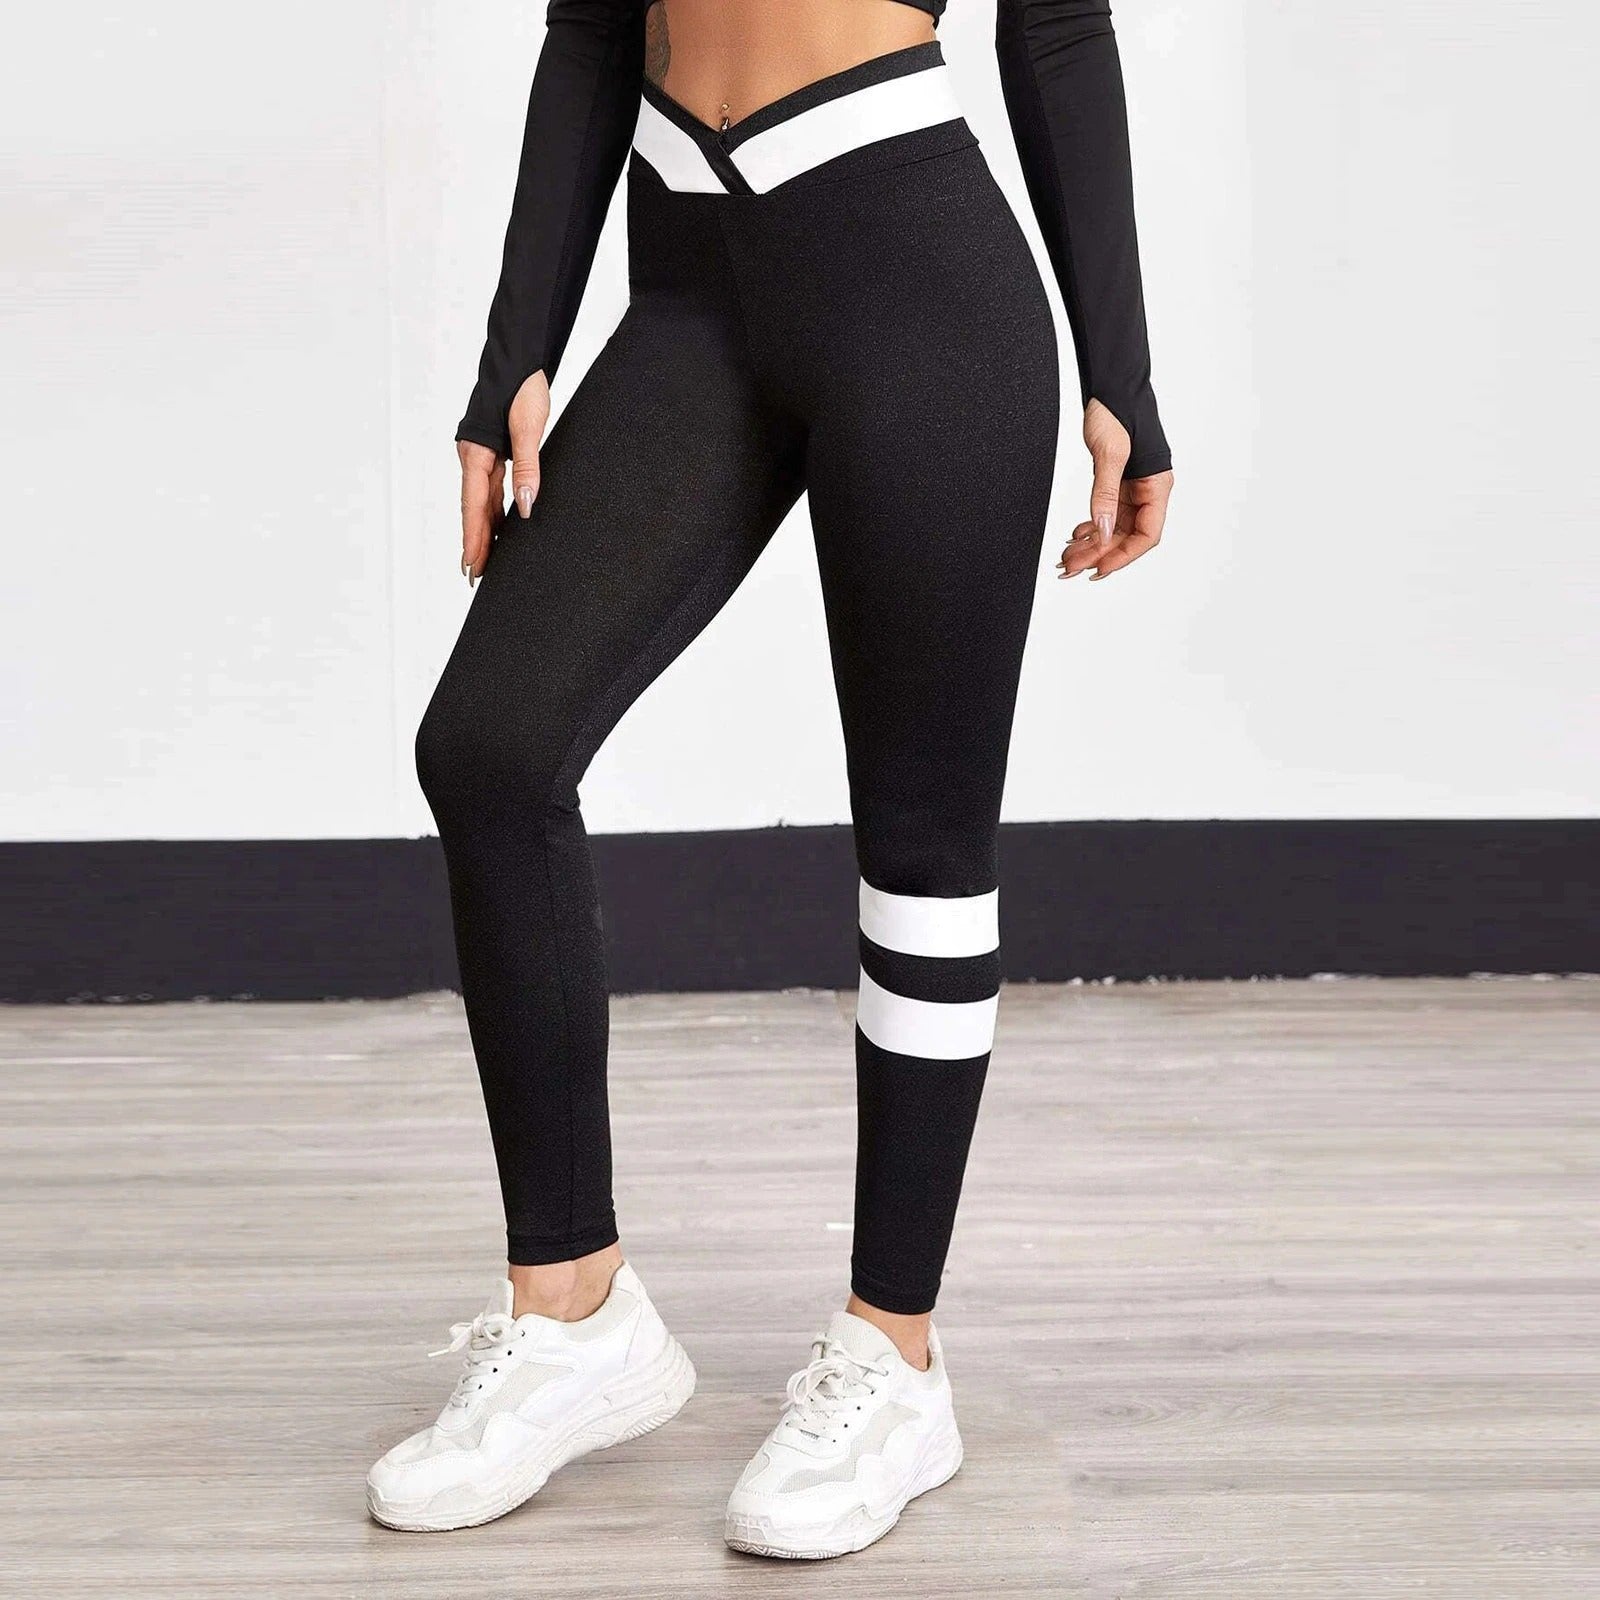 Loruna Seamless Legging with Cutouts and Stripes - Black